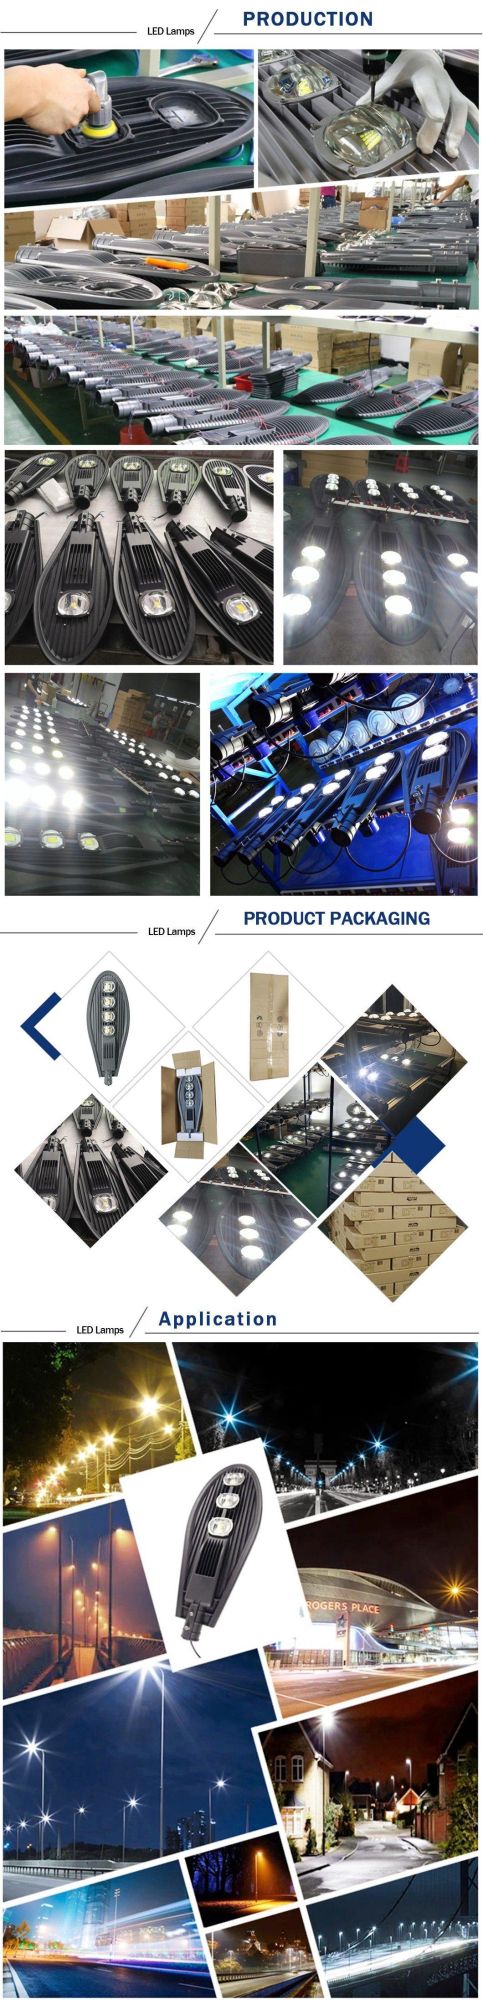 High Lumens LED Street Light Waterproof IP65 Outdoor Lighting Ce RoHS Cheap Price COB 150W LED Street Light